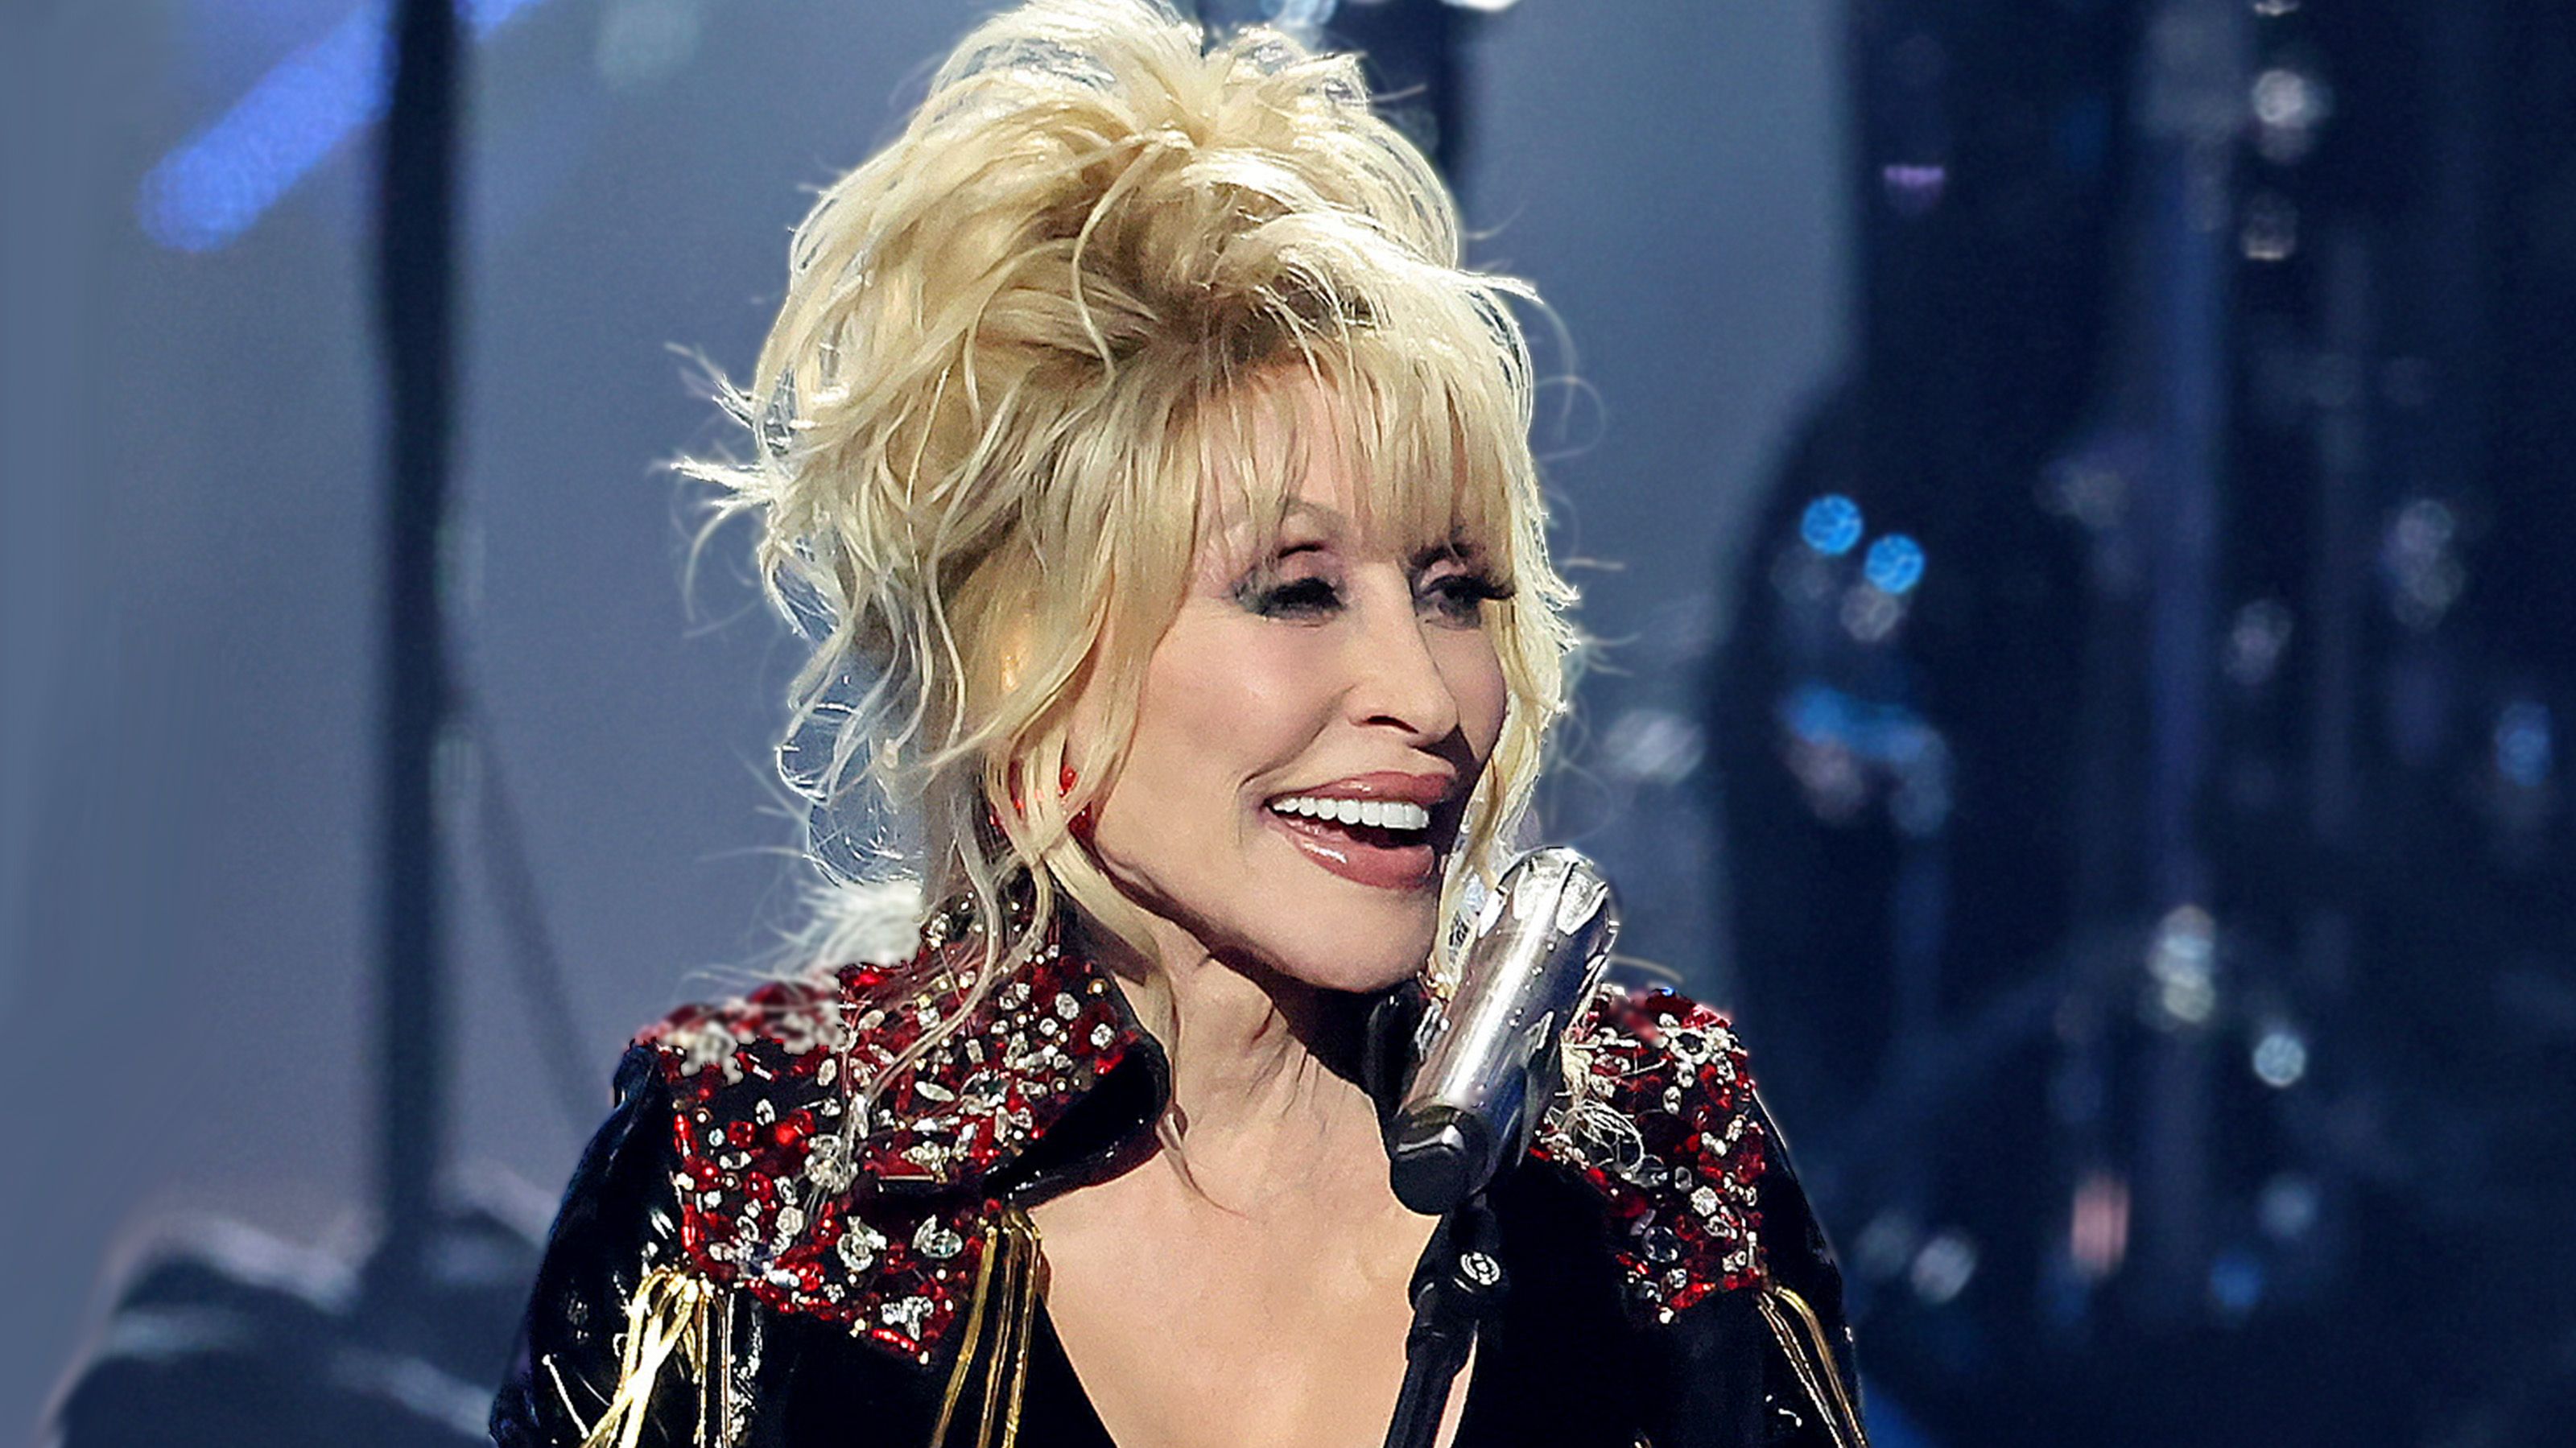 Dolly Parton reveals details about the new album 'Rockstar'